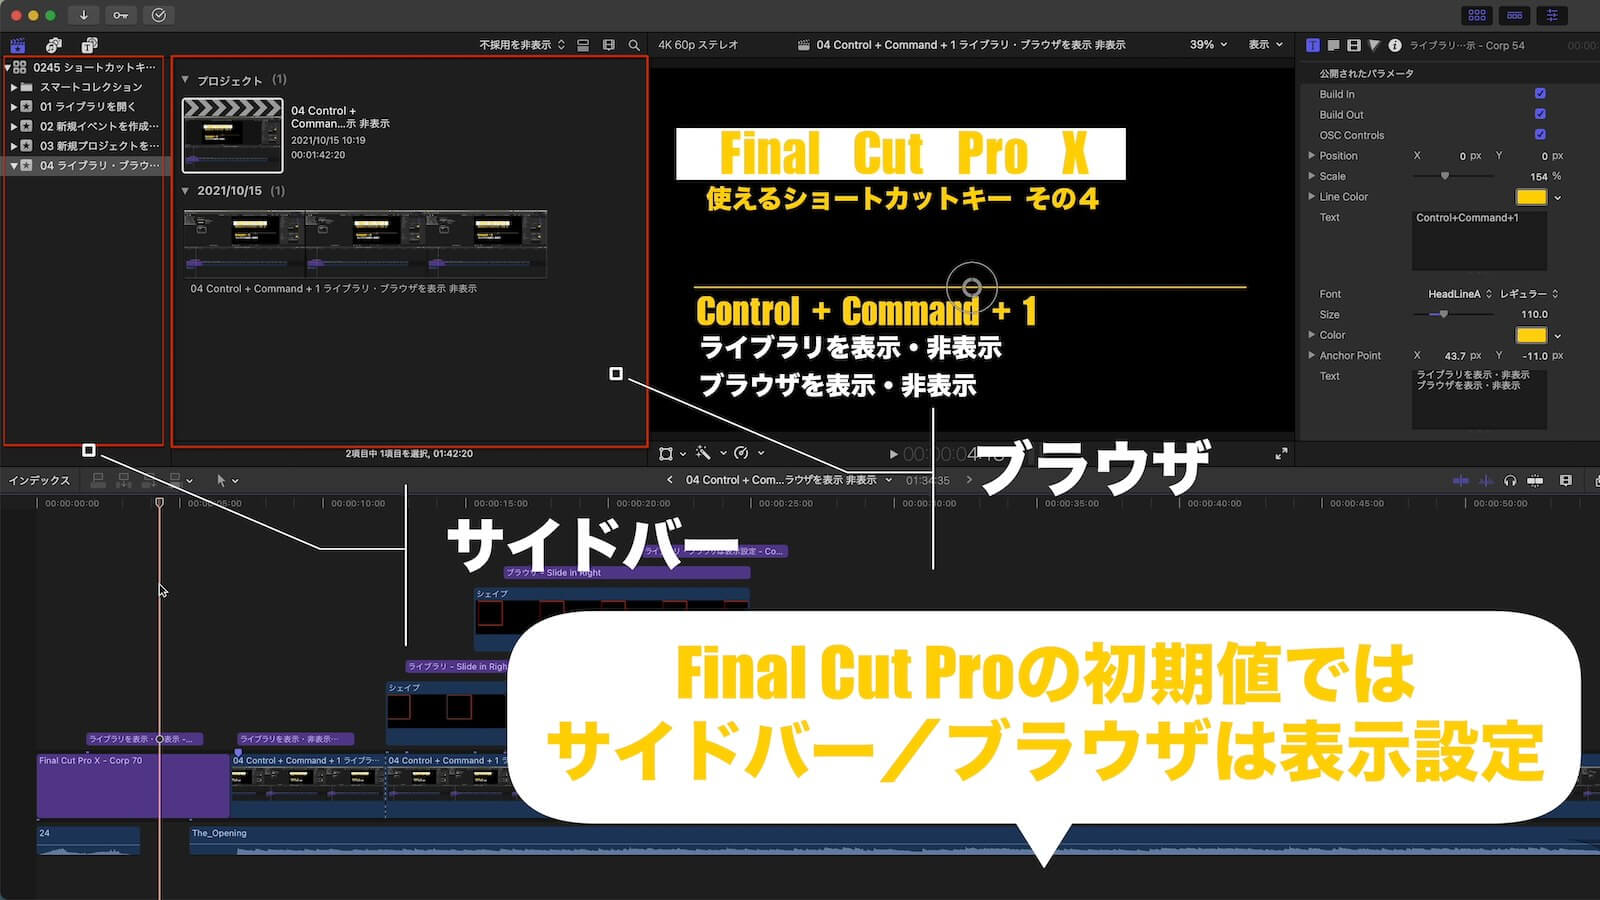 Final Cut Pro sidebar browser display screen